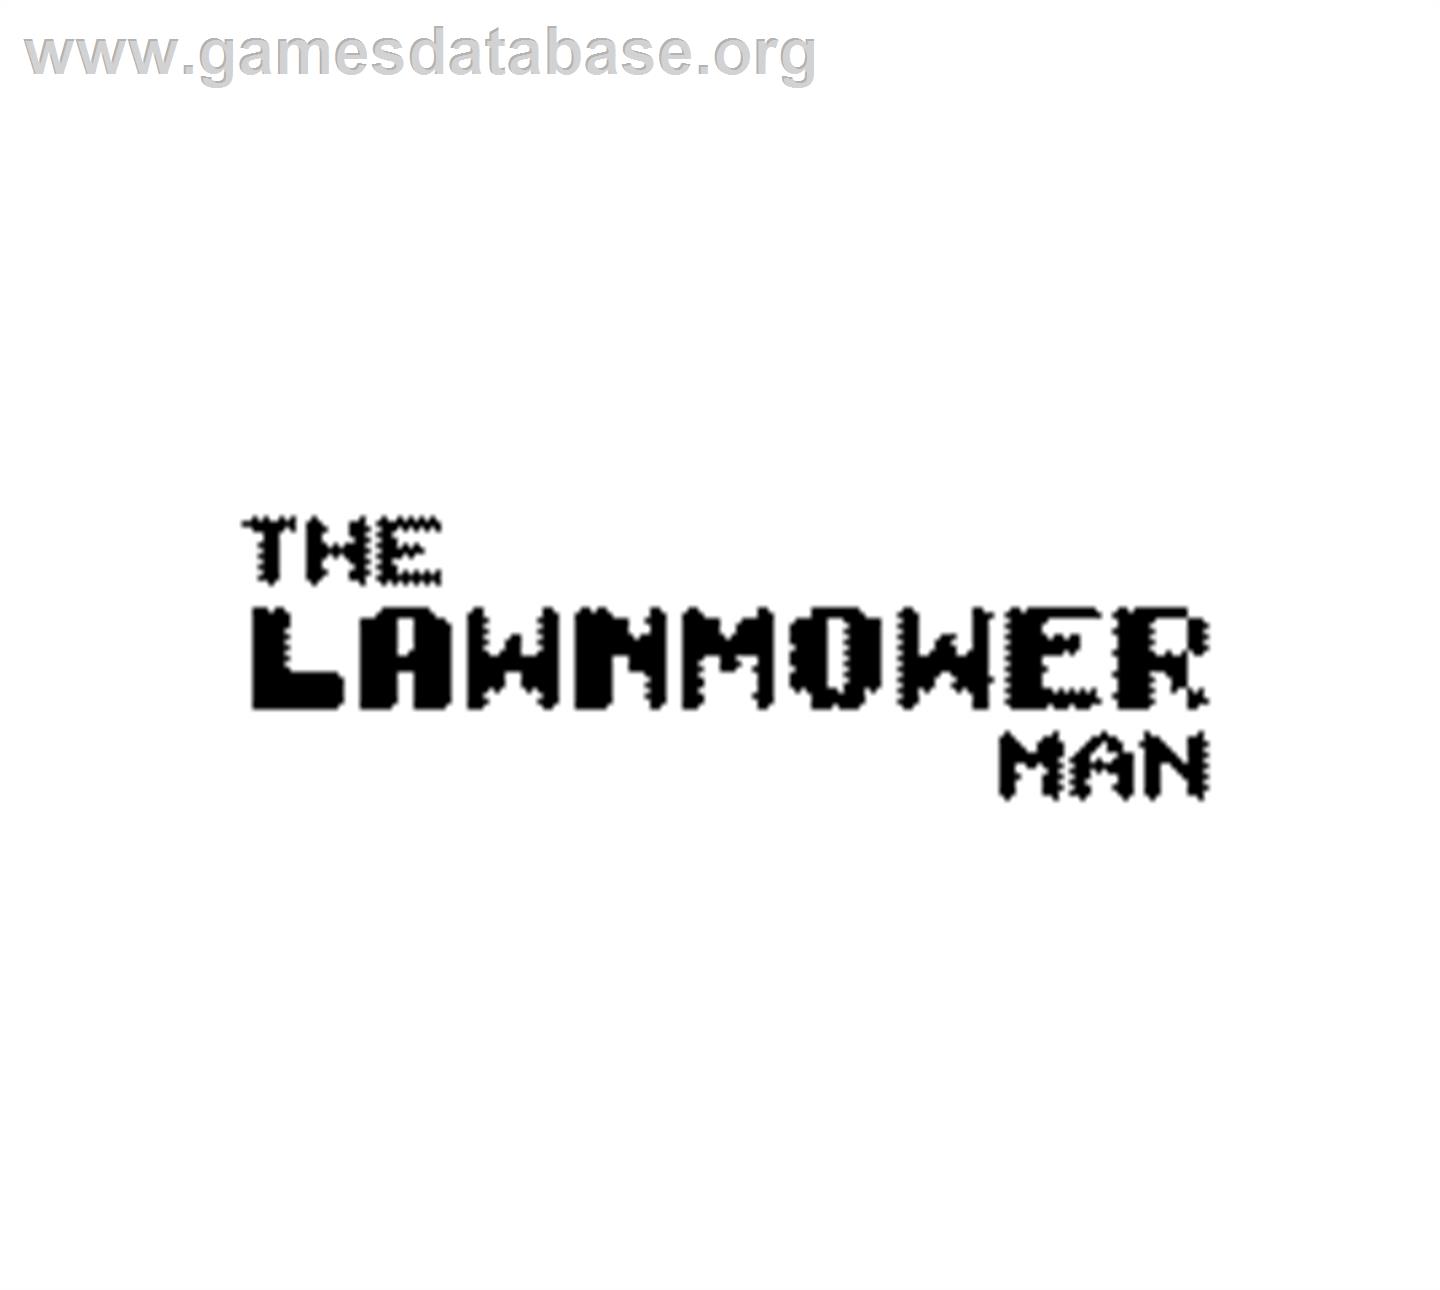 Lawnmower Man - Nintendo Game Boy - Artwork - Title Screen